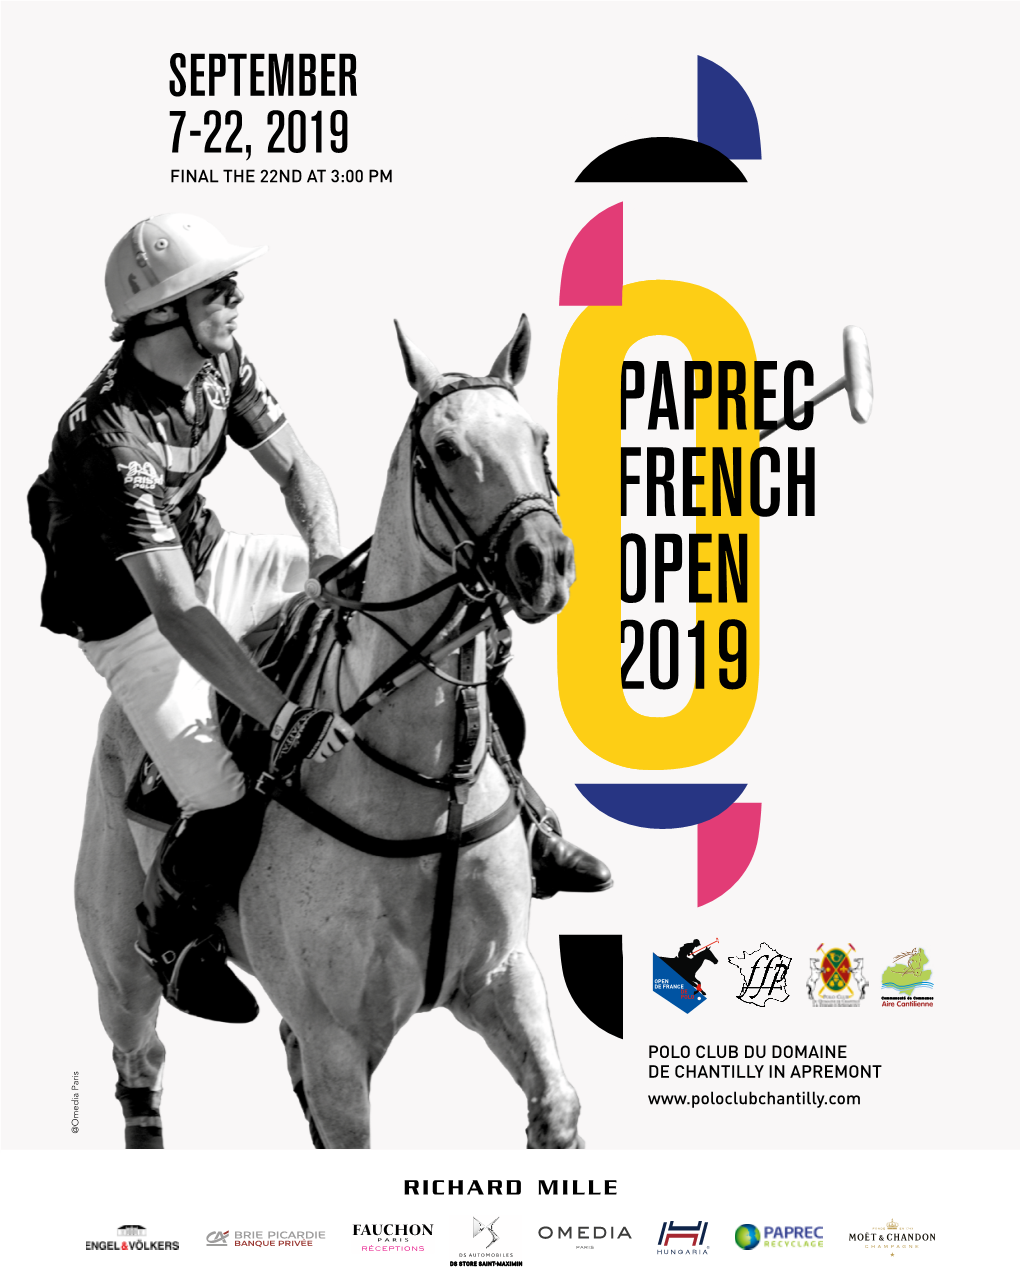 Paprec French Open 2019